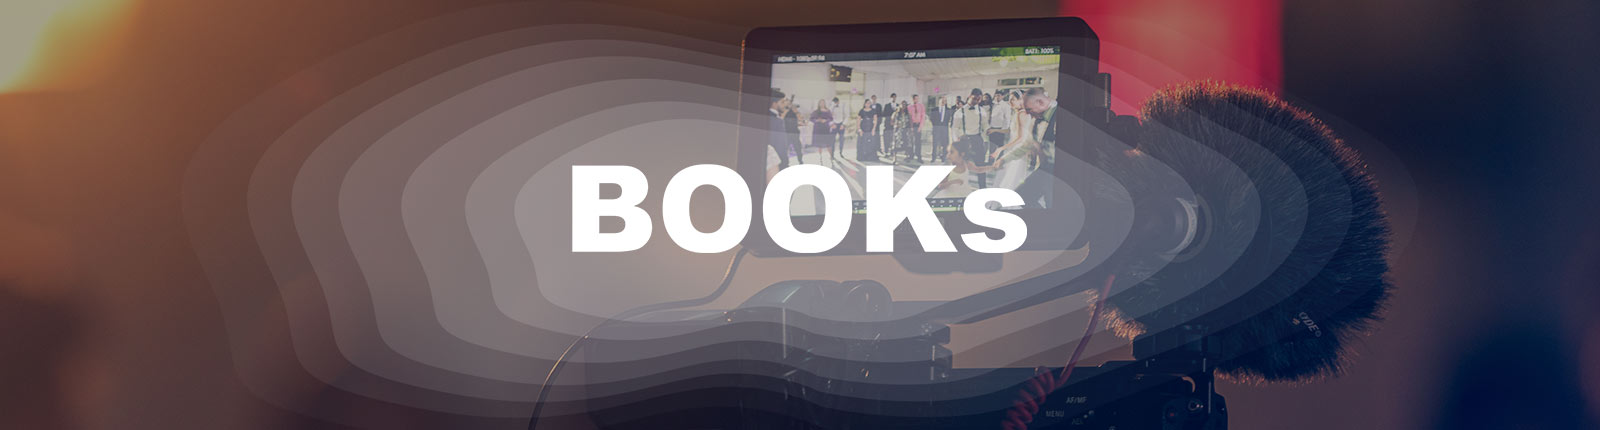 header_books_videosponsoring